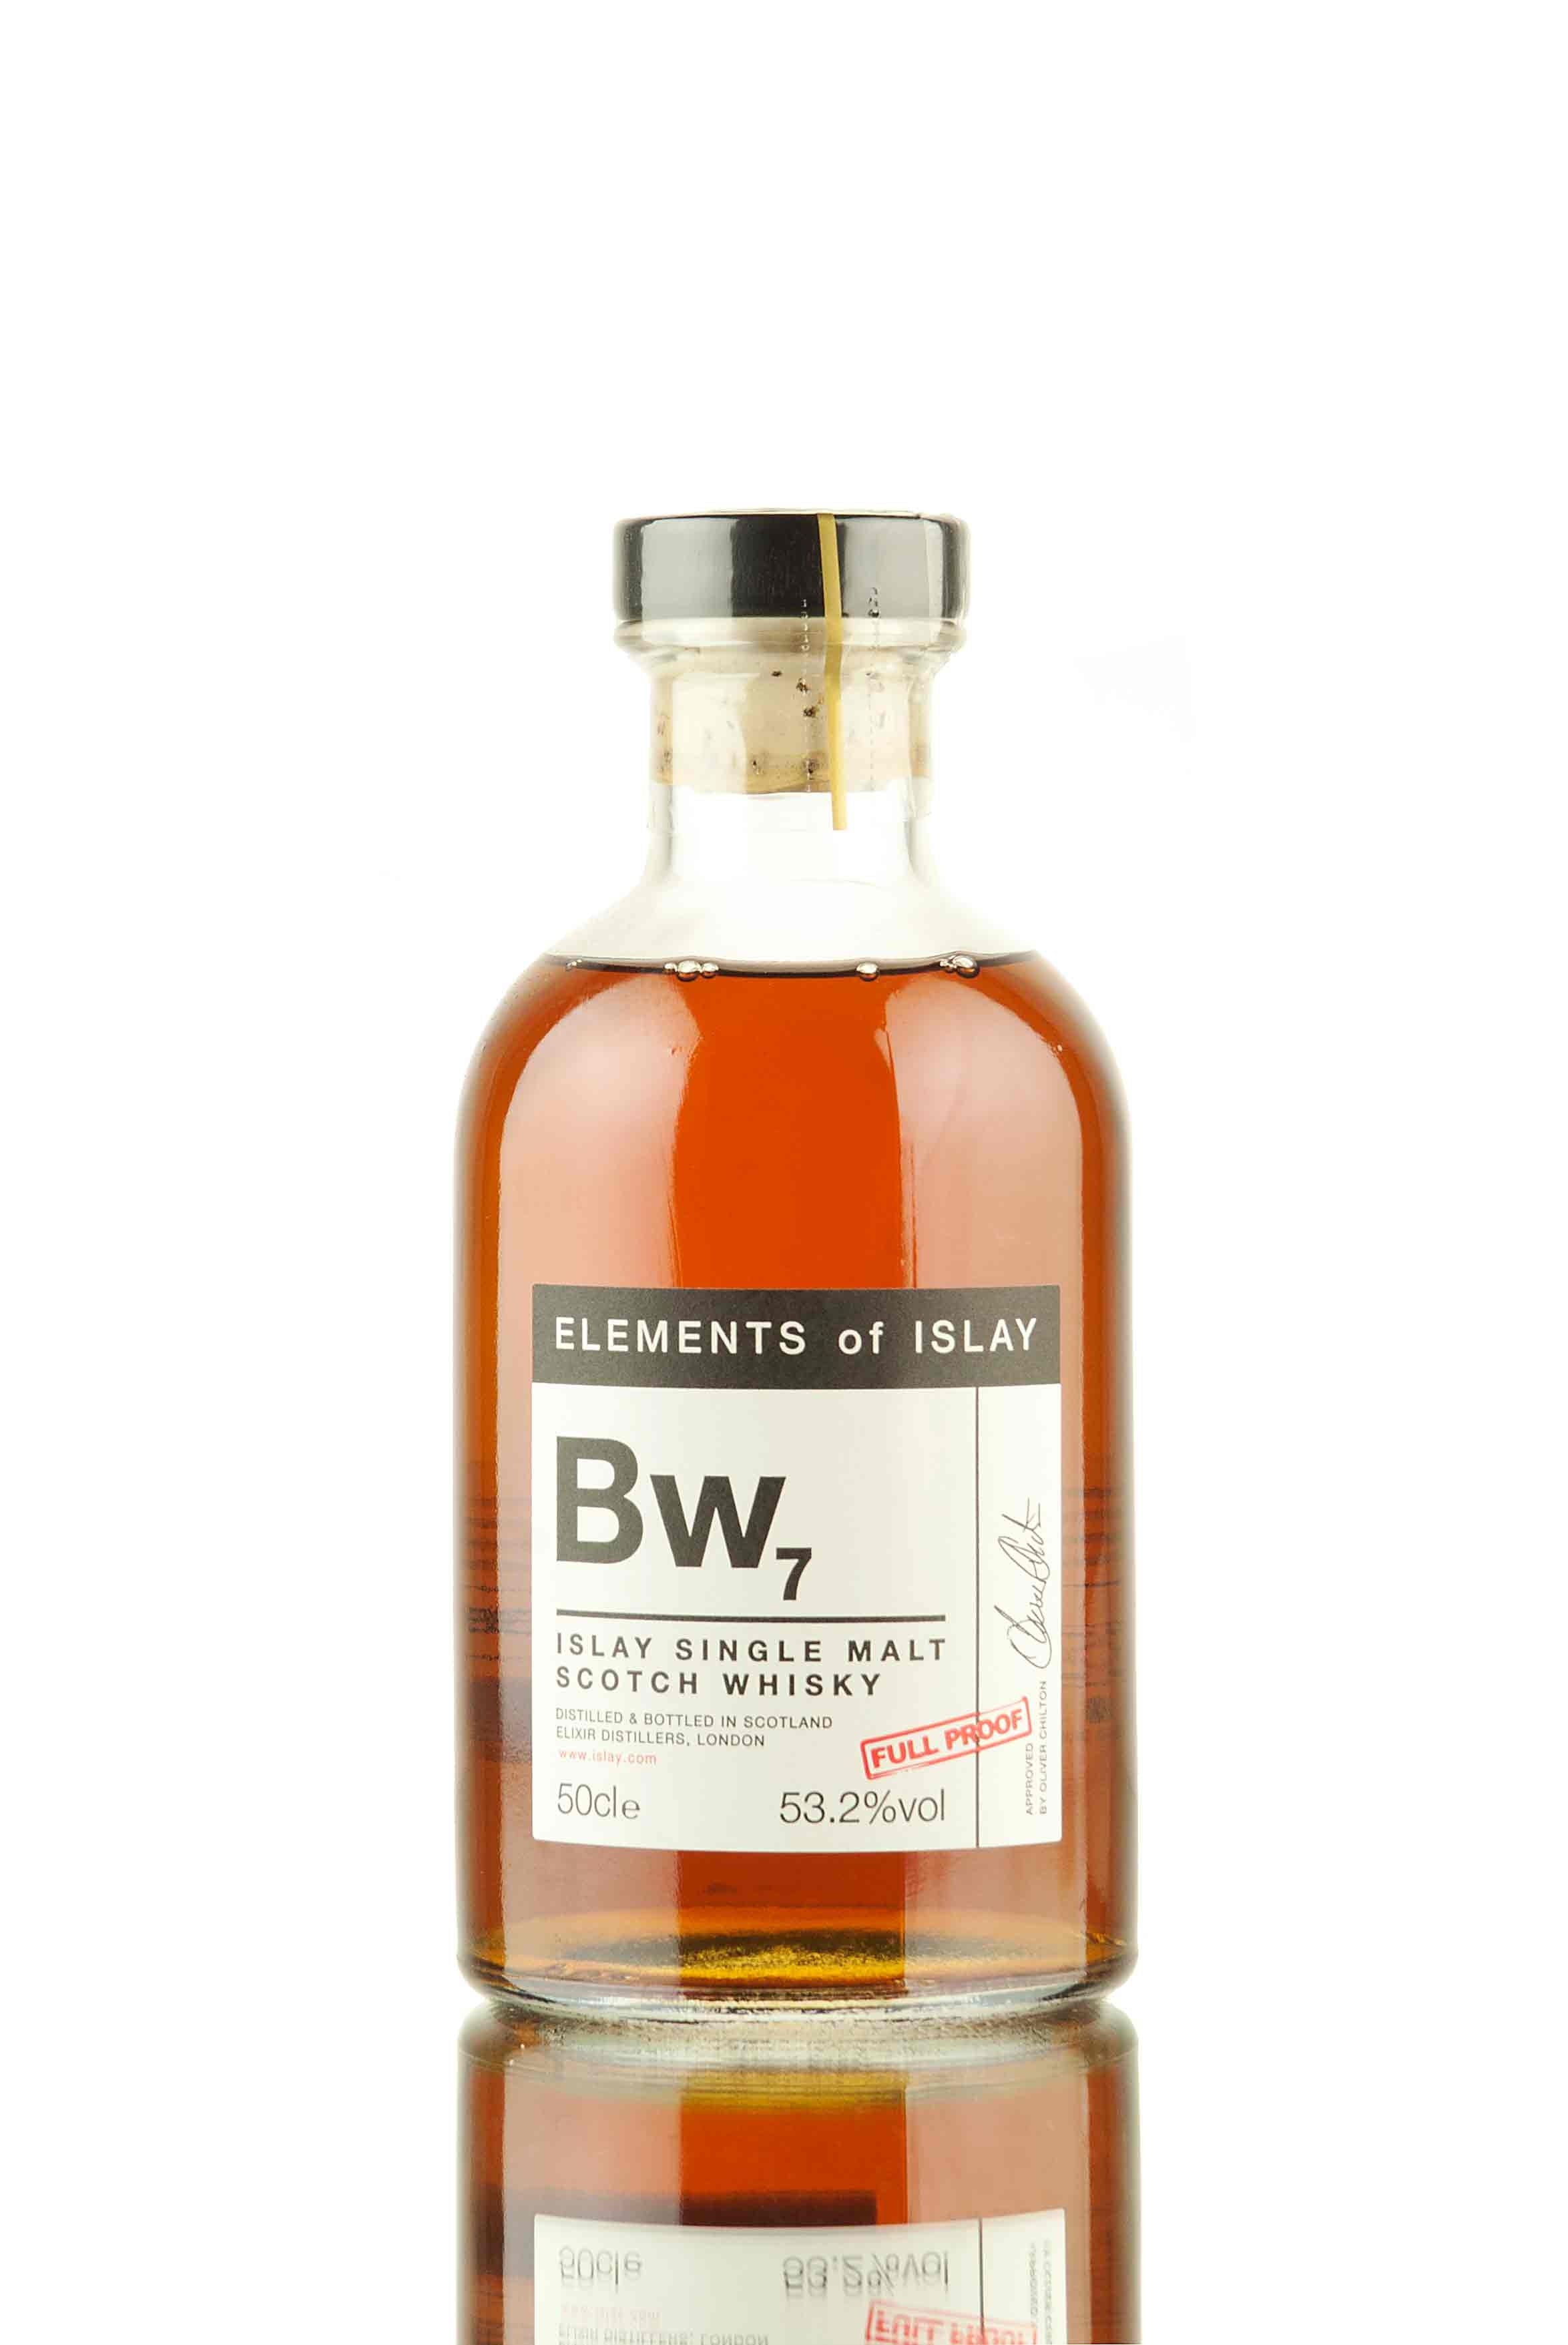 Bw7 - Elements of Islay (Bowmore)